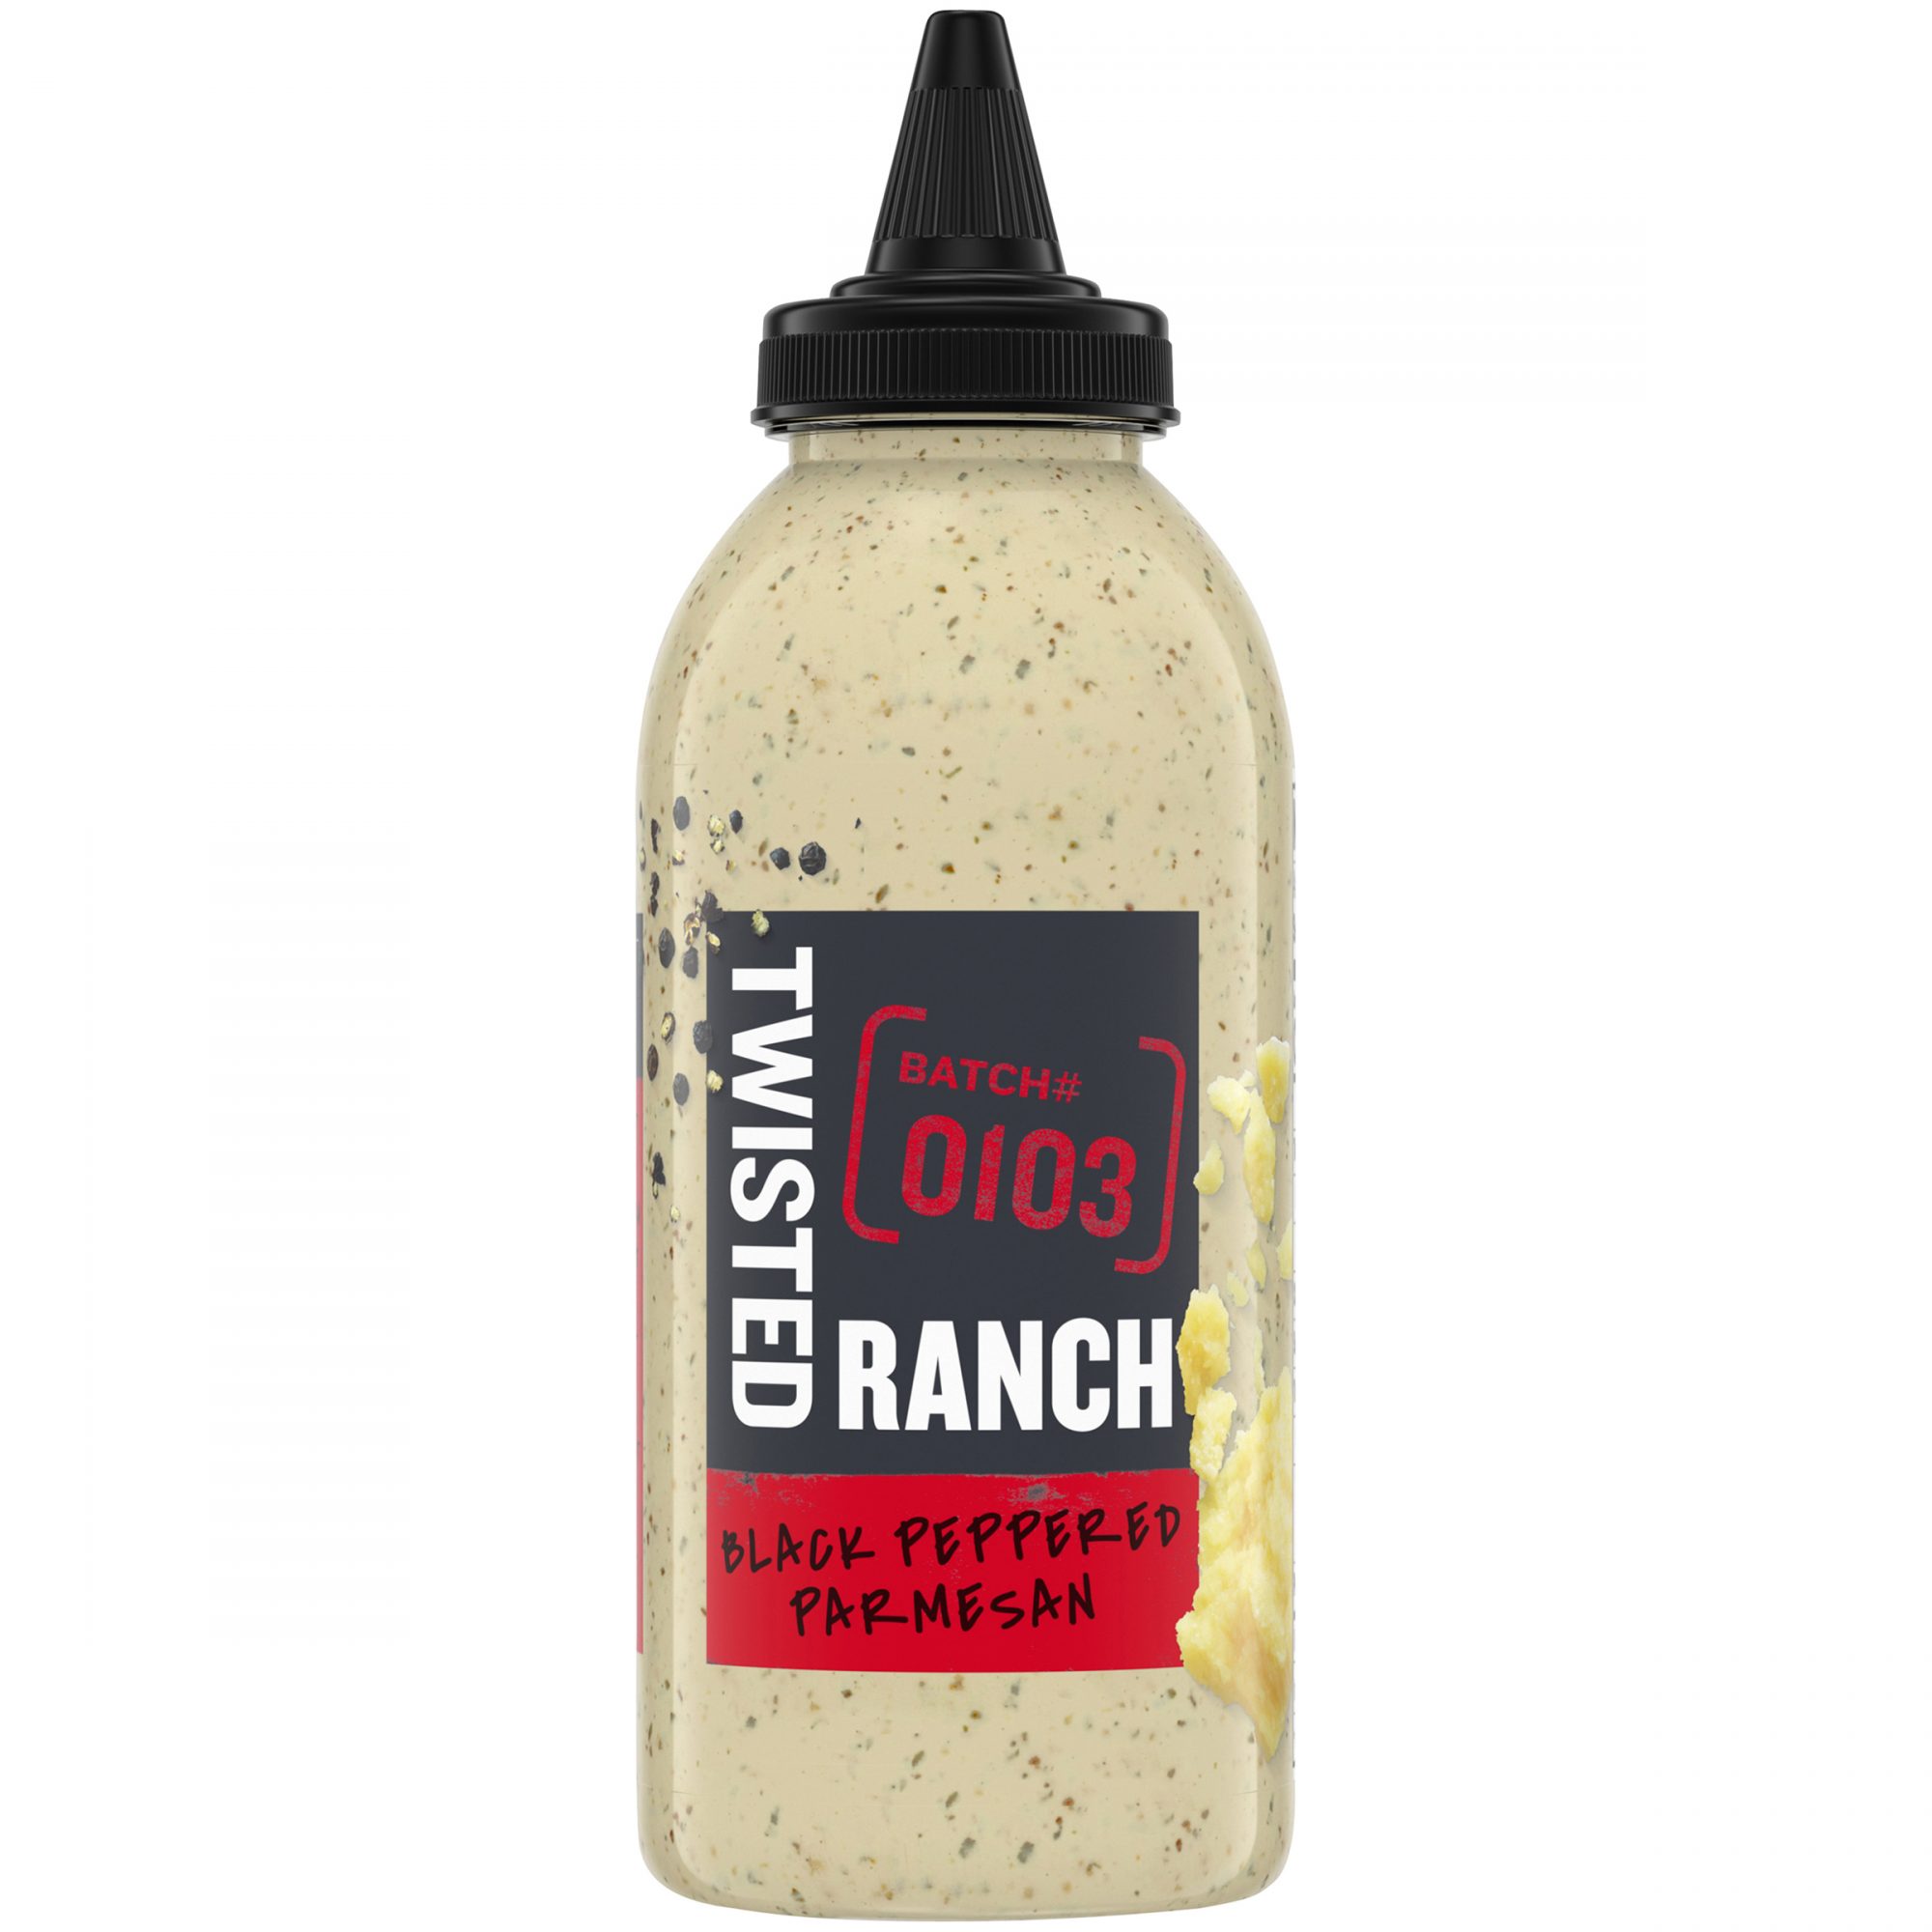 Black Pepper Parmesan Ranch Bottle